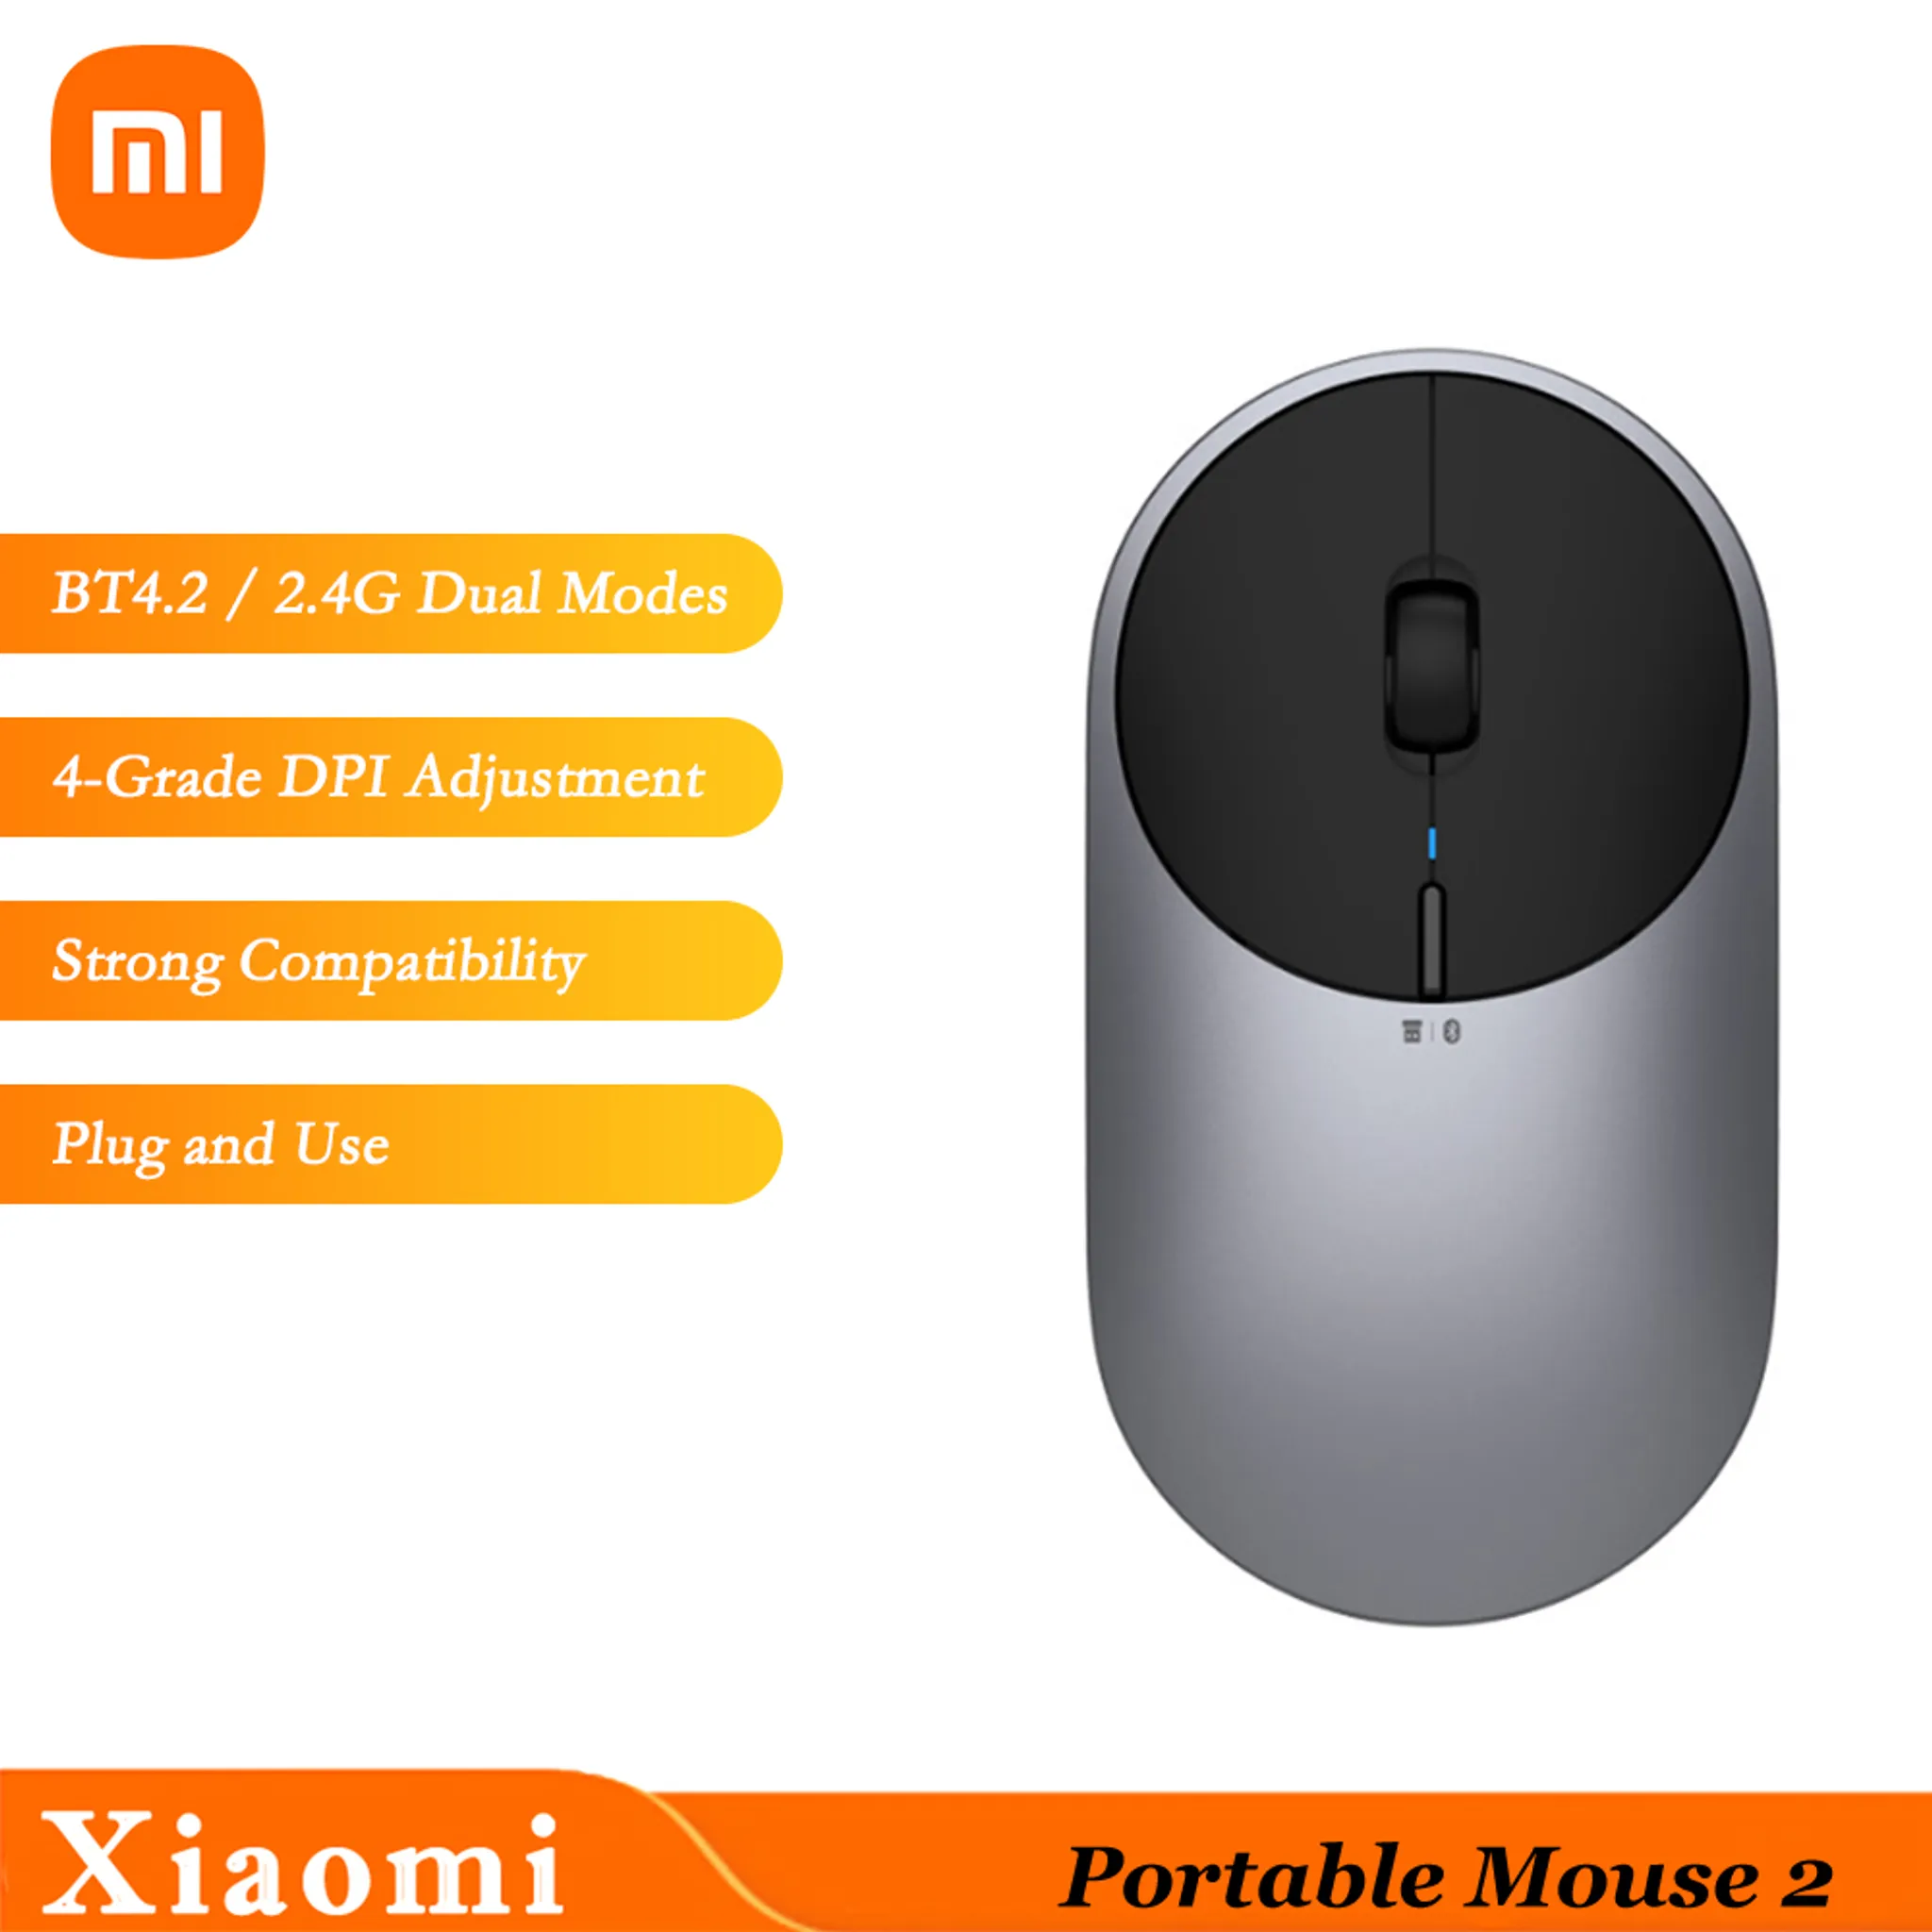 Xiaomi Mi Portable Mouse 2 Drahtlose Maus mit